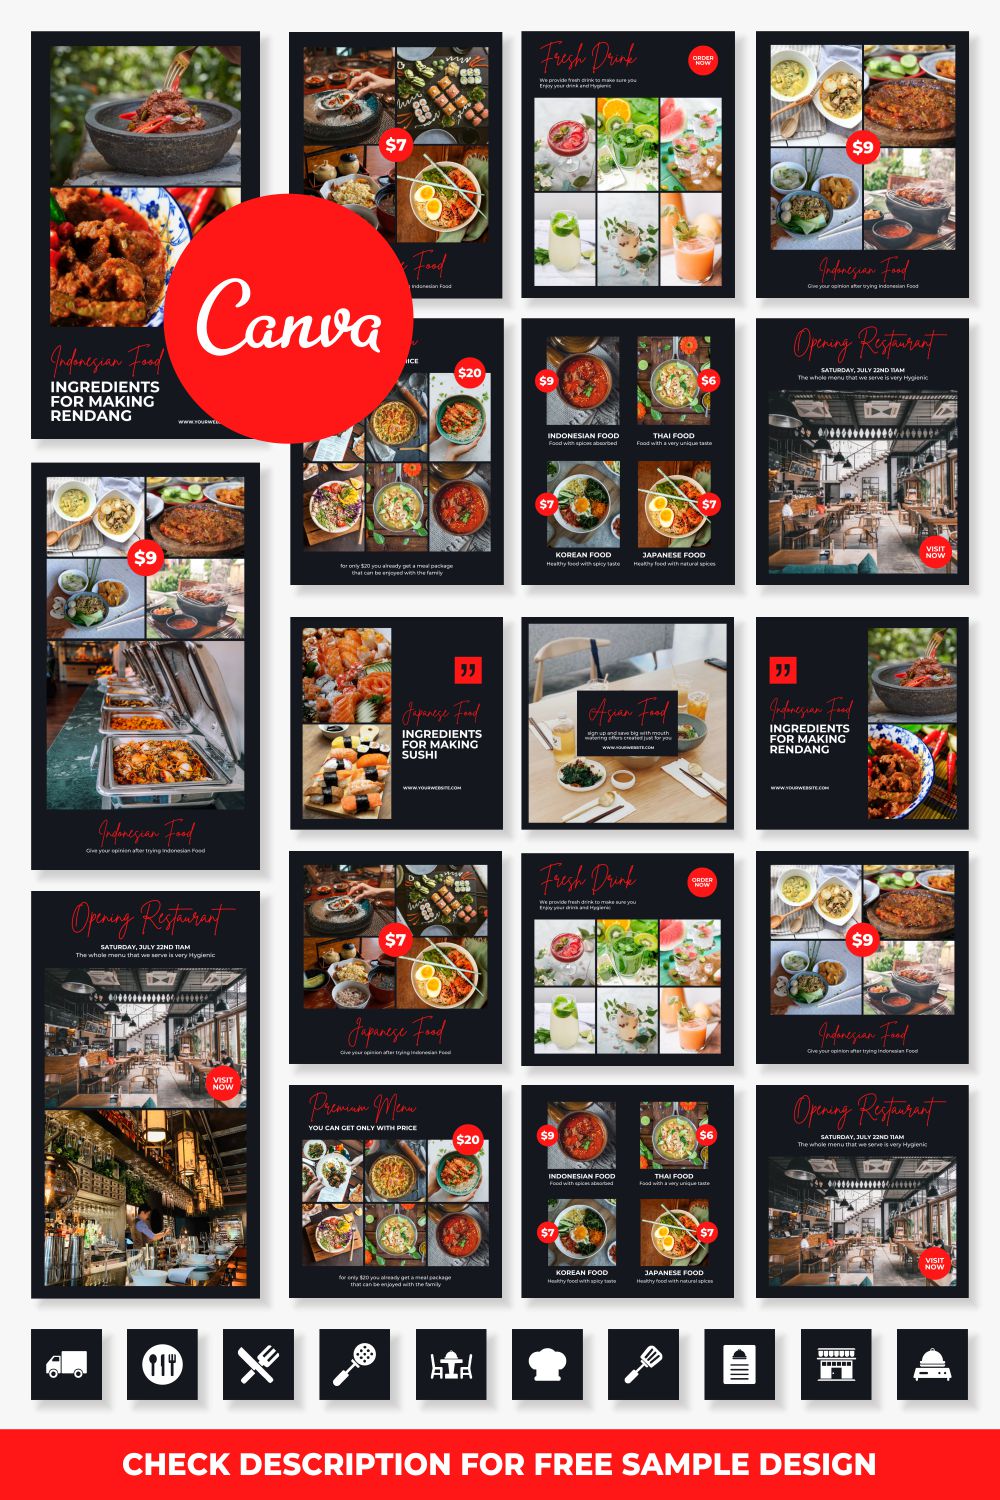 Food And Restaurant Instagram Post Canva Instagram Templates Pinterest Image.